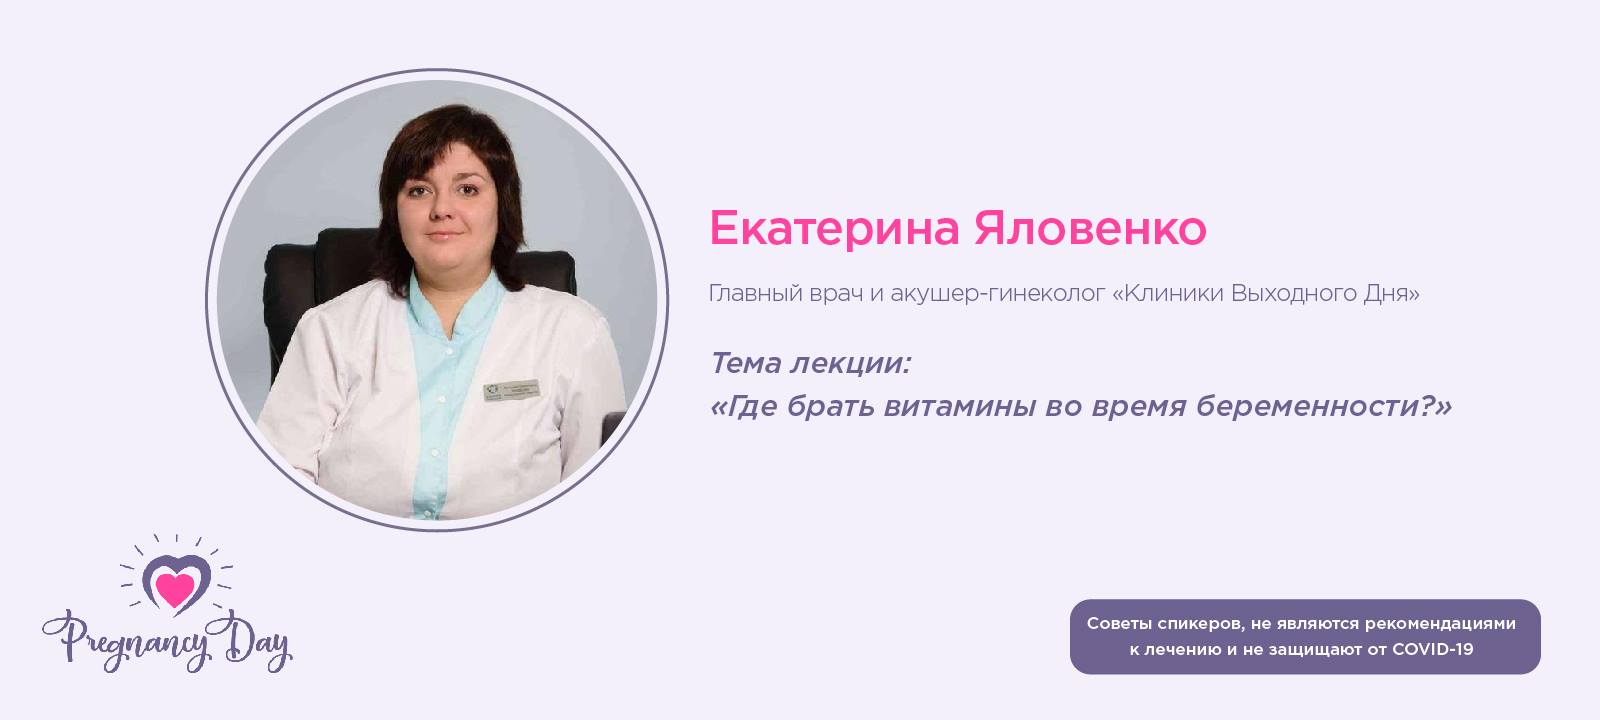 Гинеколог Екатерина Яловенко